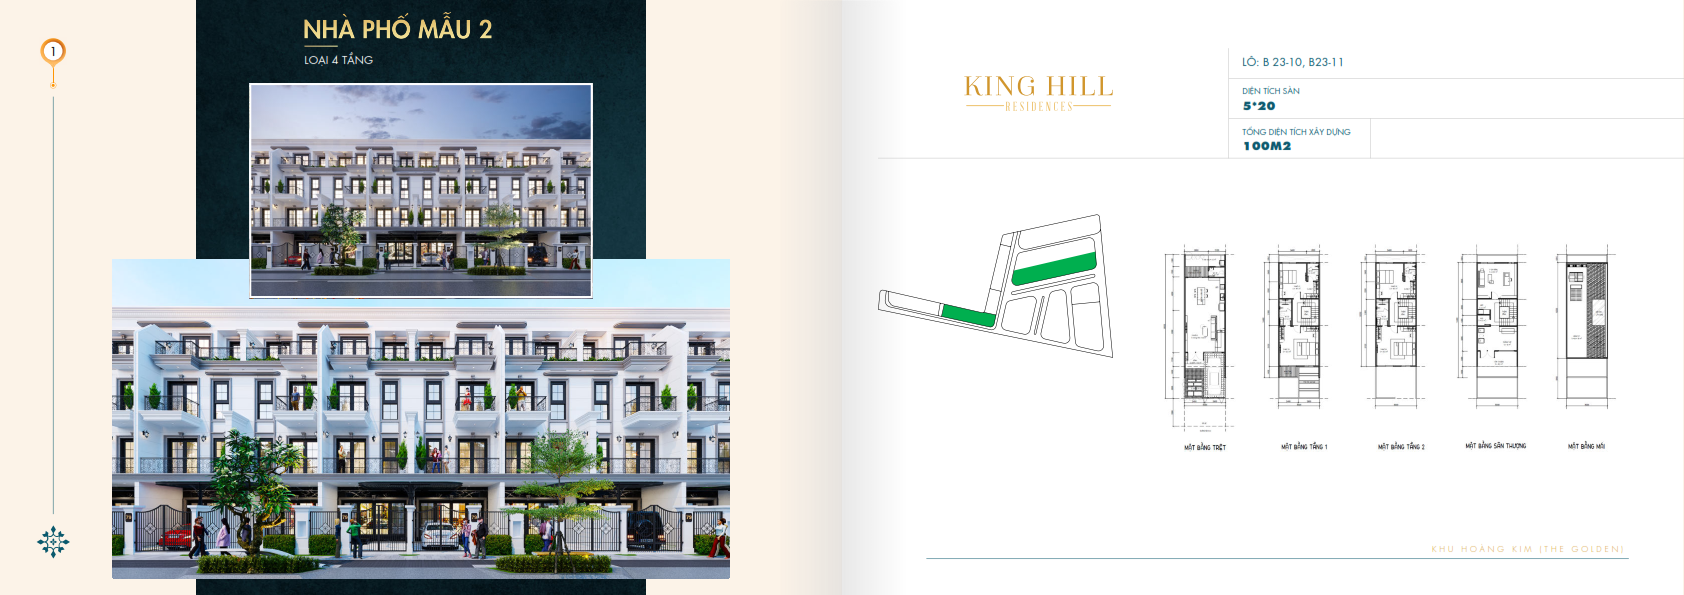 Nha pho mau 2 Du an King Hill Residences - King Hill Residences